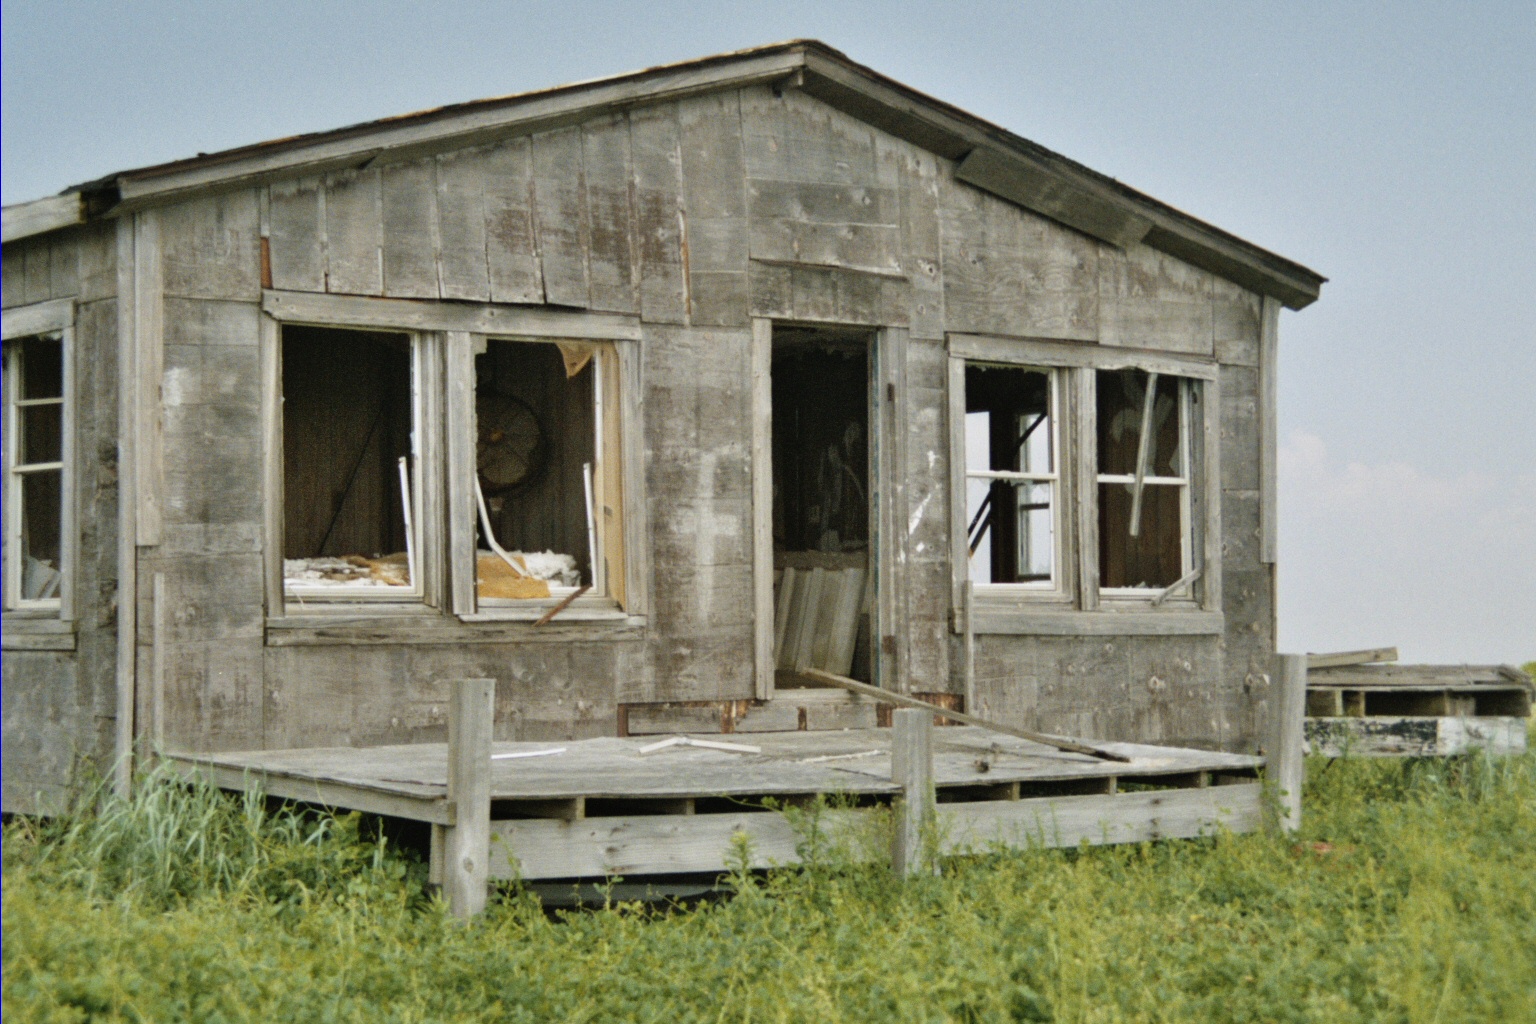 Ruined House on Cheniere Caminada, 2006